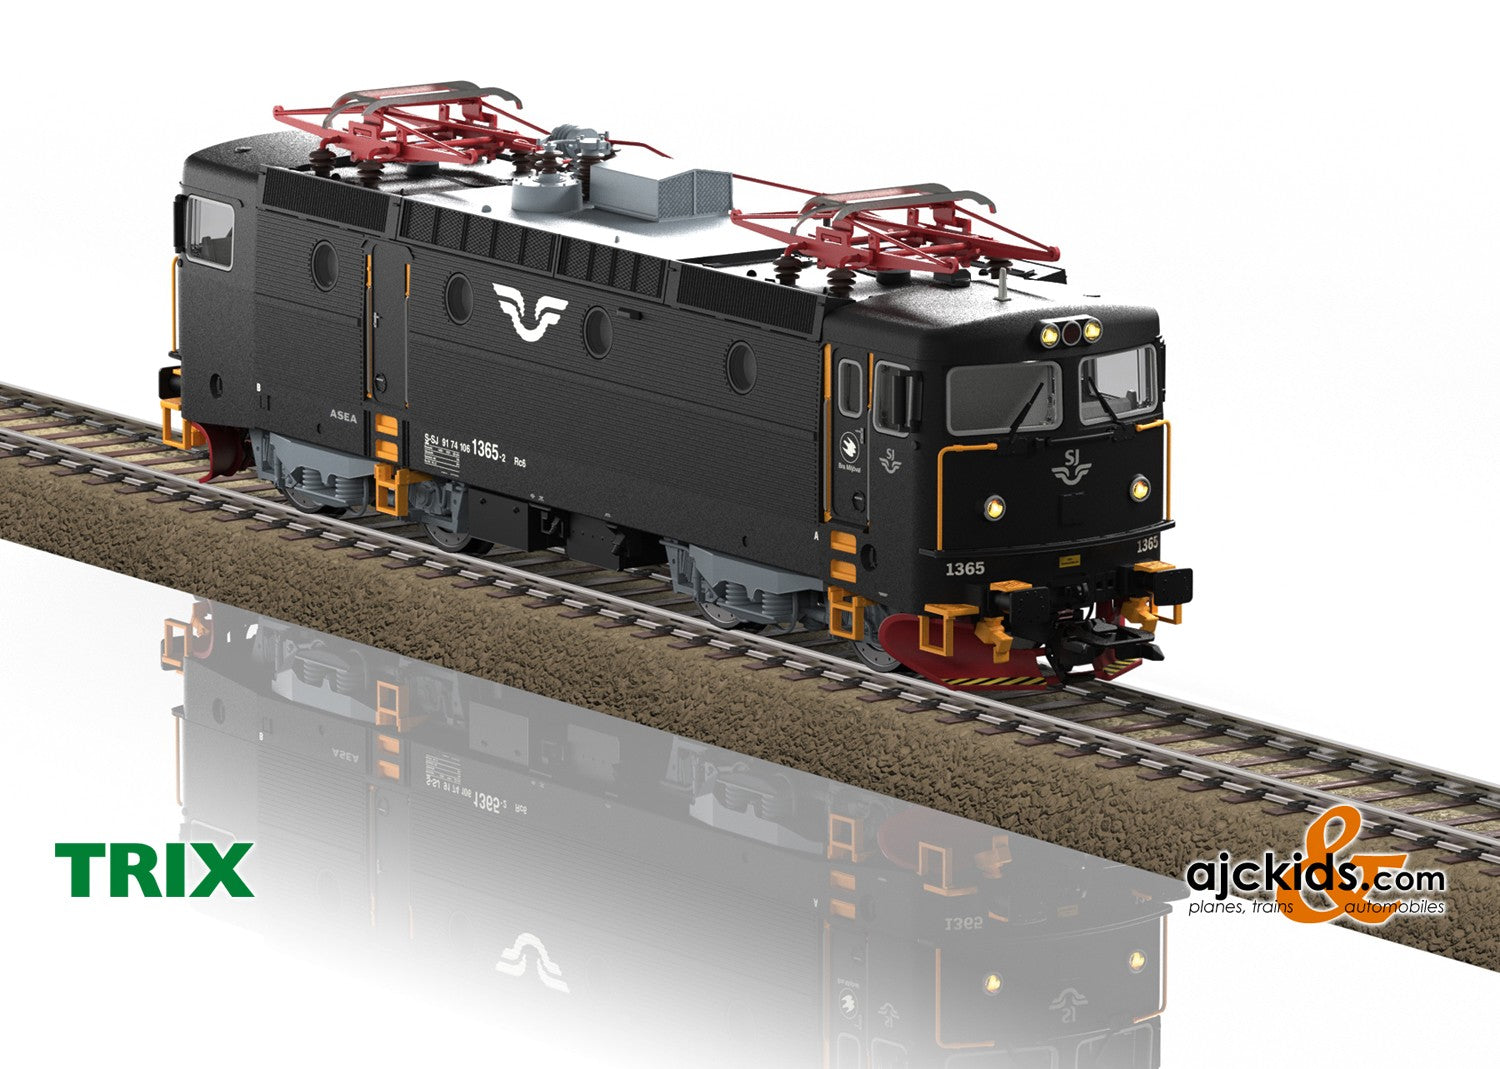 Trix 25280 - Class Rc6 Electric Locomotive at Ajckids.com